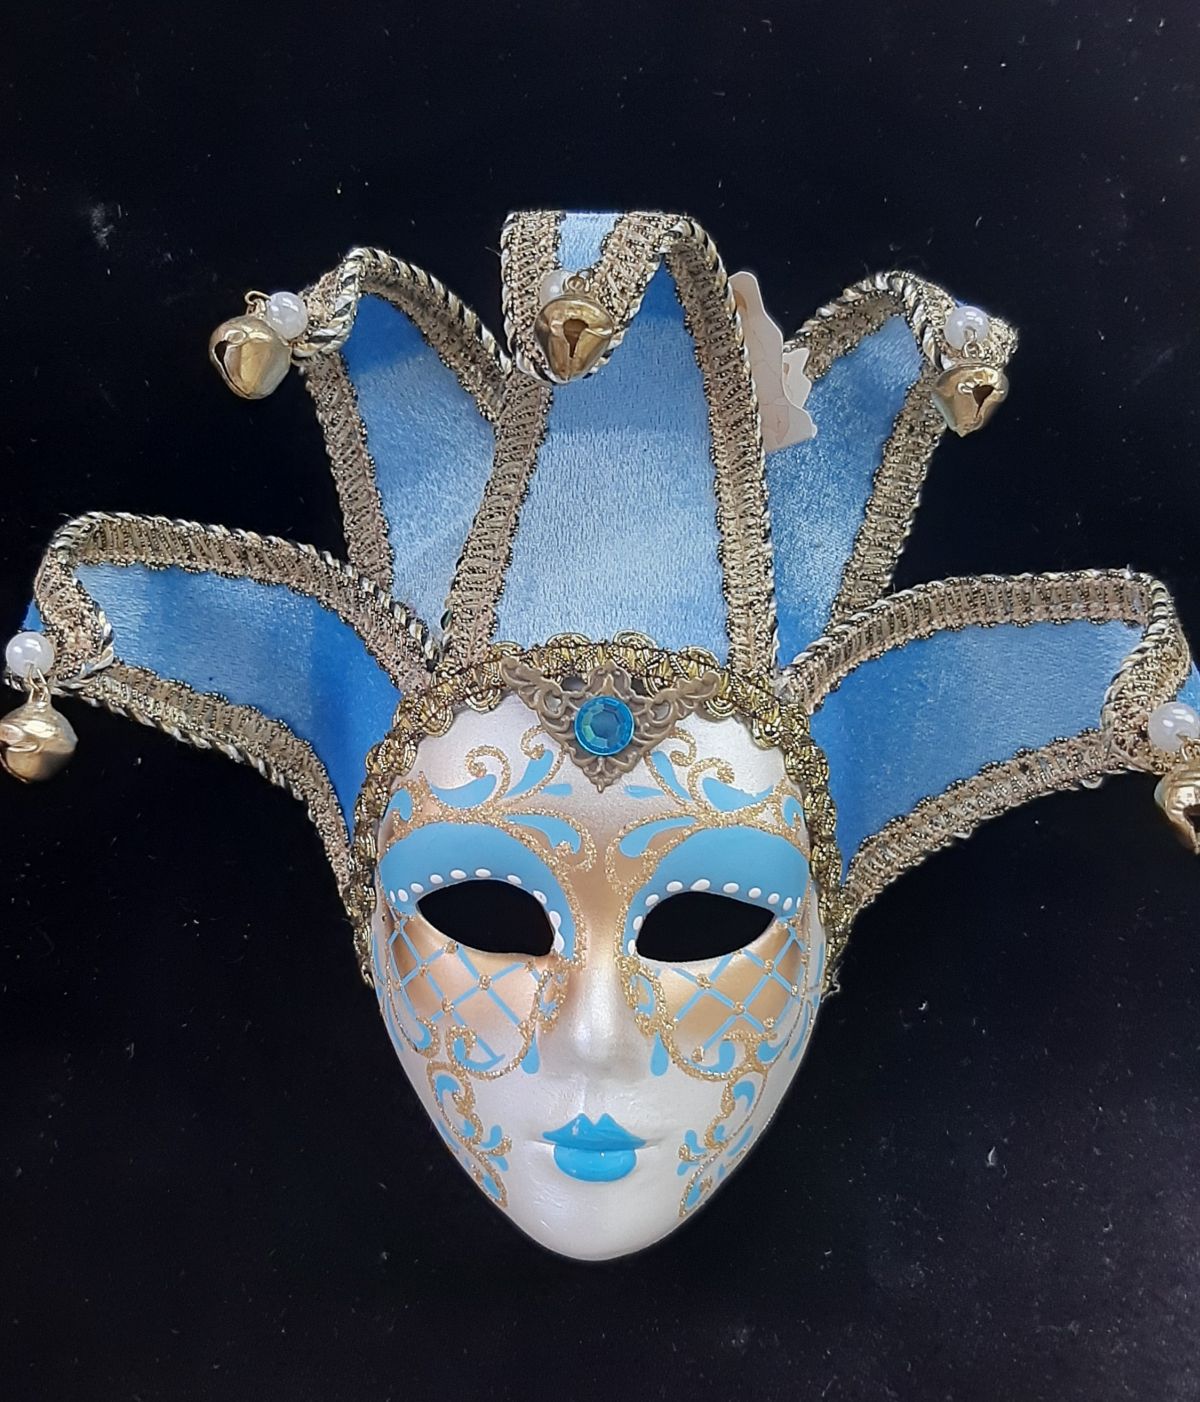 Authentic Venice mask